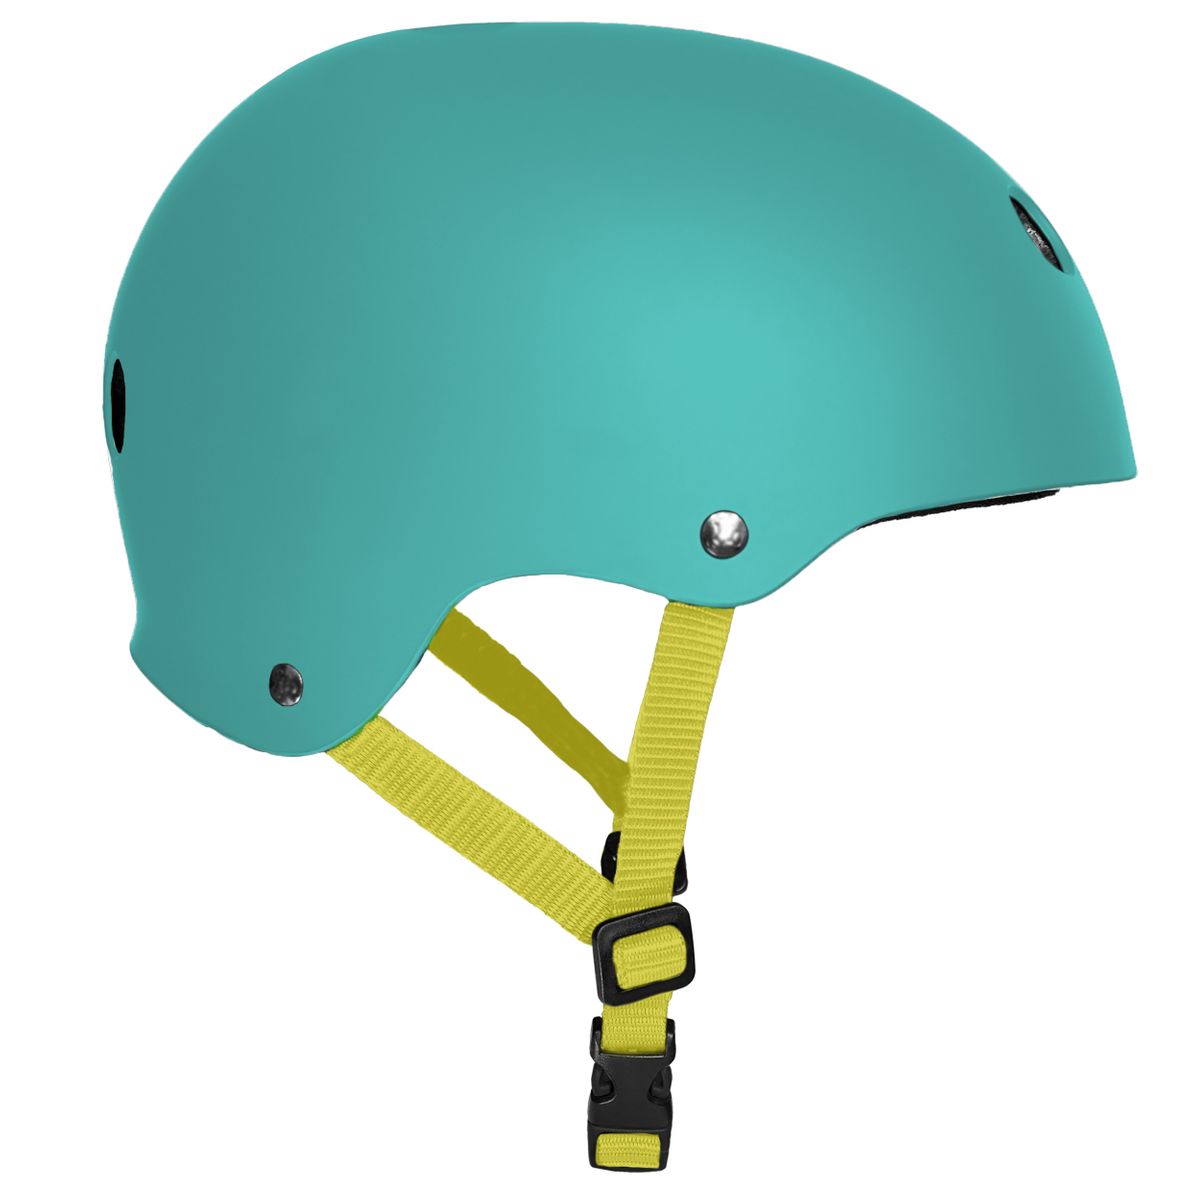 [RDY] [送料無料] Eight Ball デュアルサーティファイドティールヘルメット [楽天海外通販] | Eight Ball Dual Certified Teal Helmet